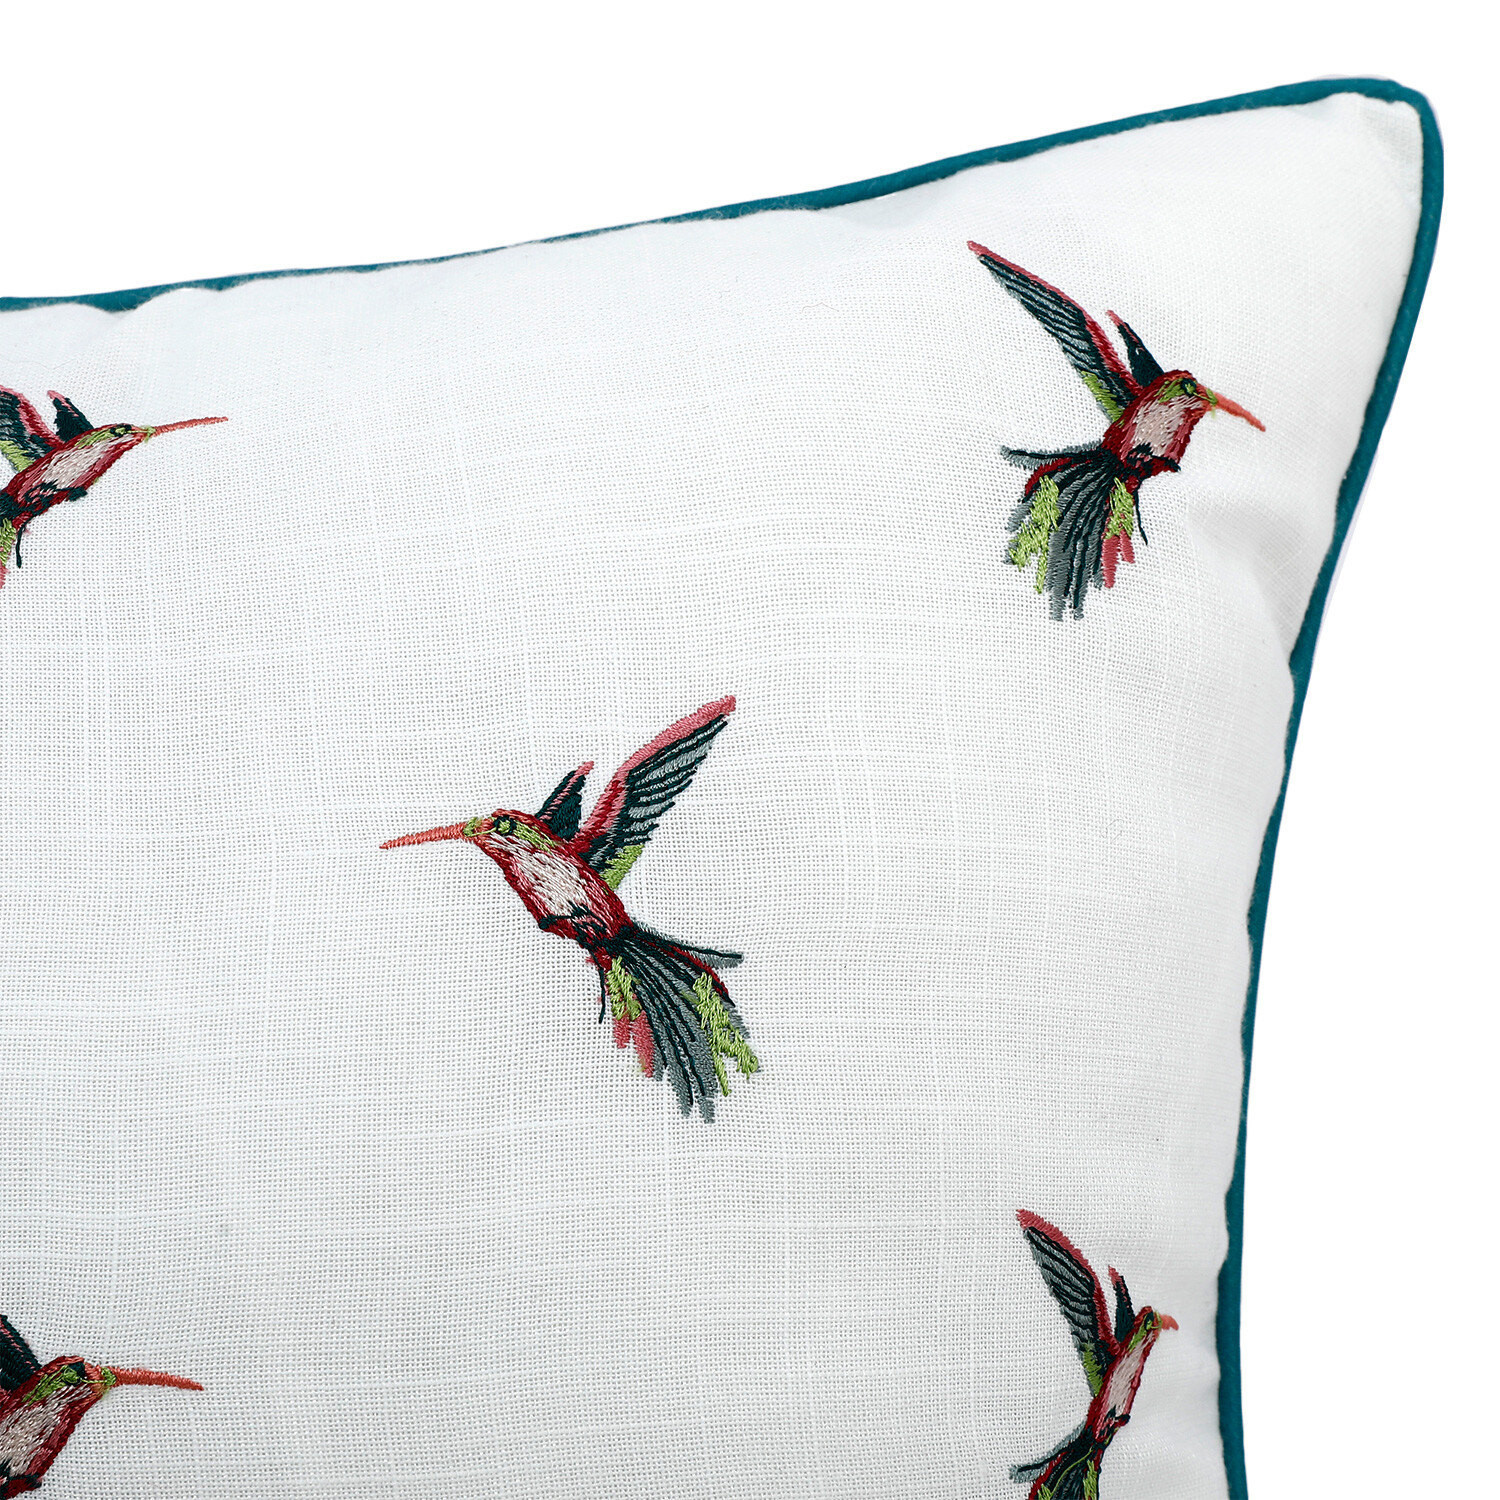 Hummingbird Embroidered Cushion - Teal Image 2